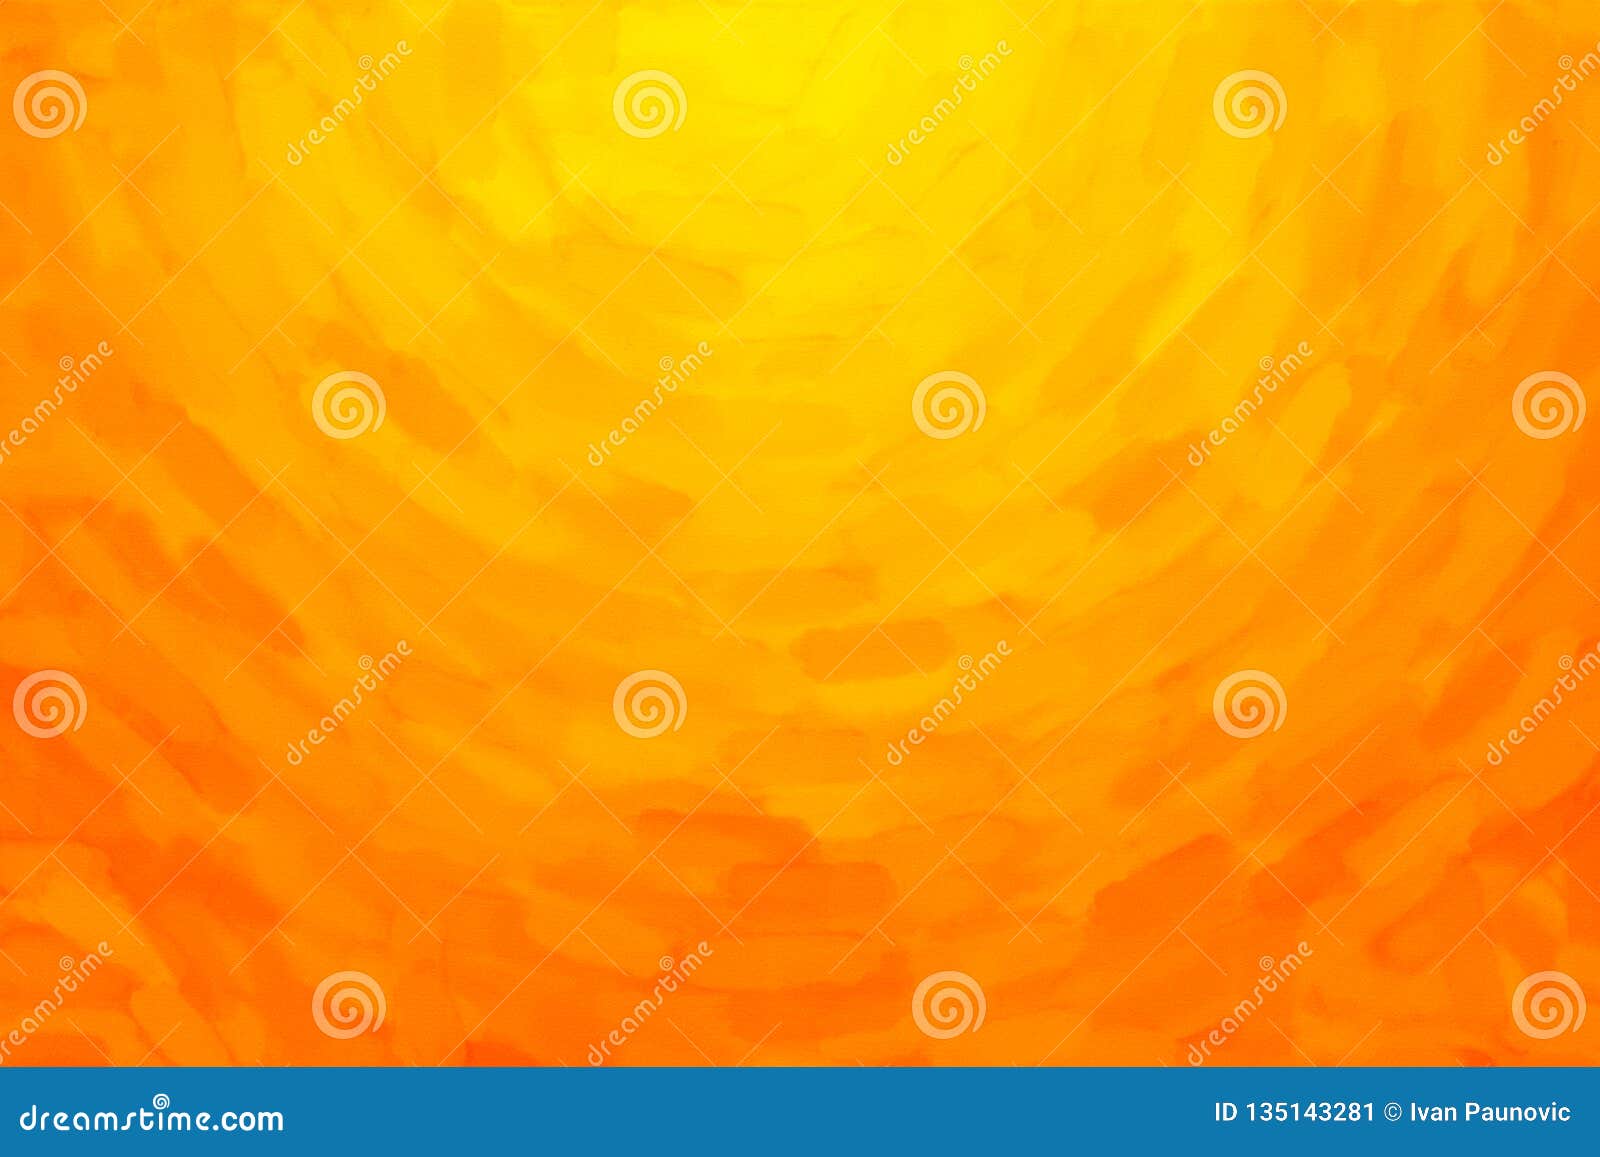 Plain Orange Wallpapers - Wallpaper Cave